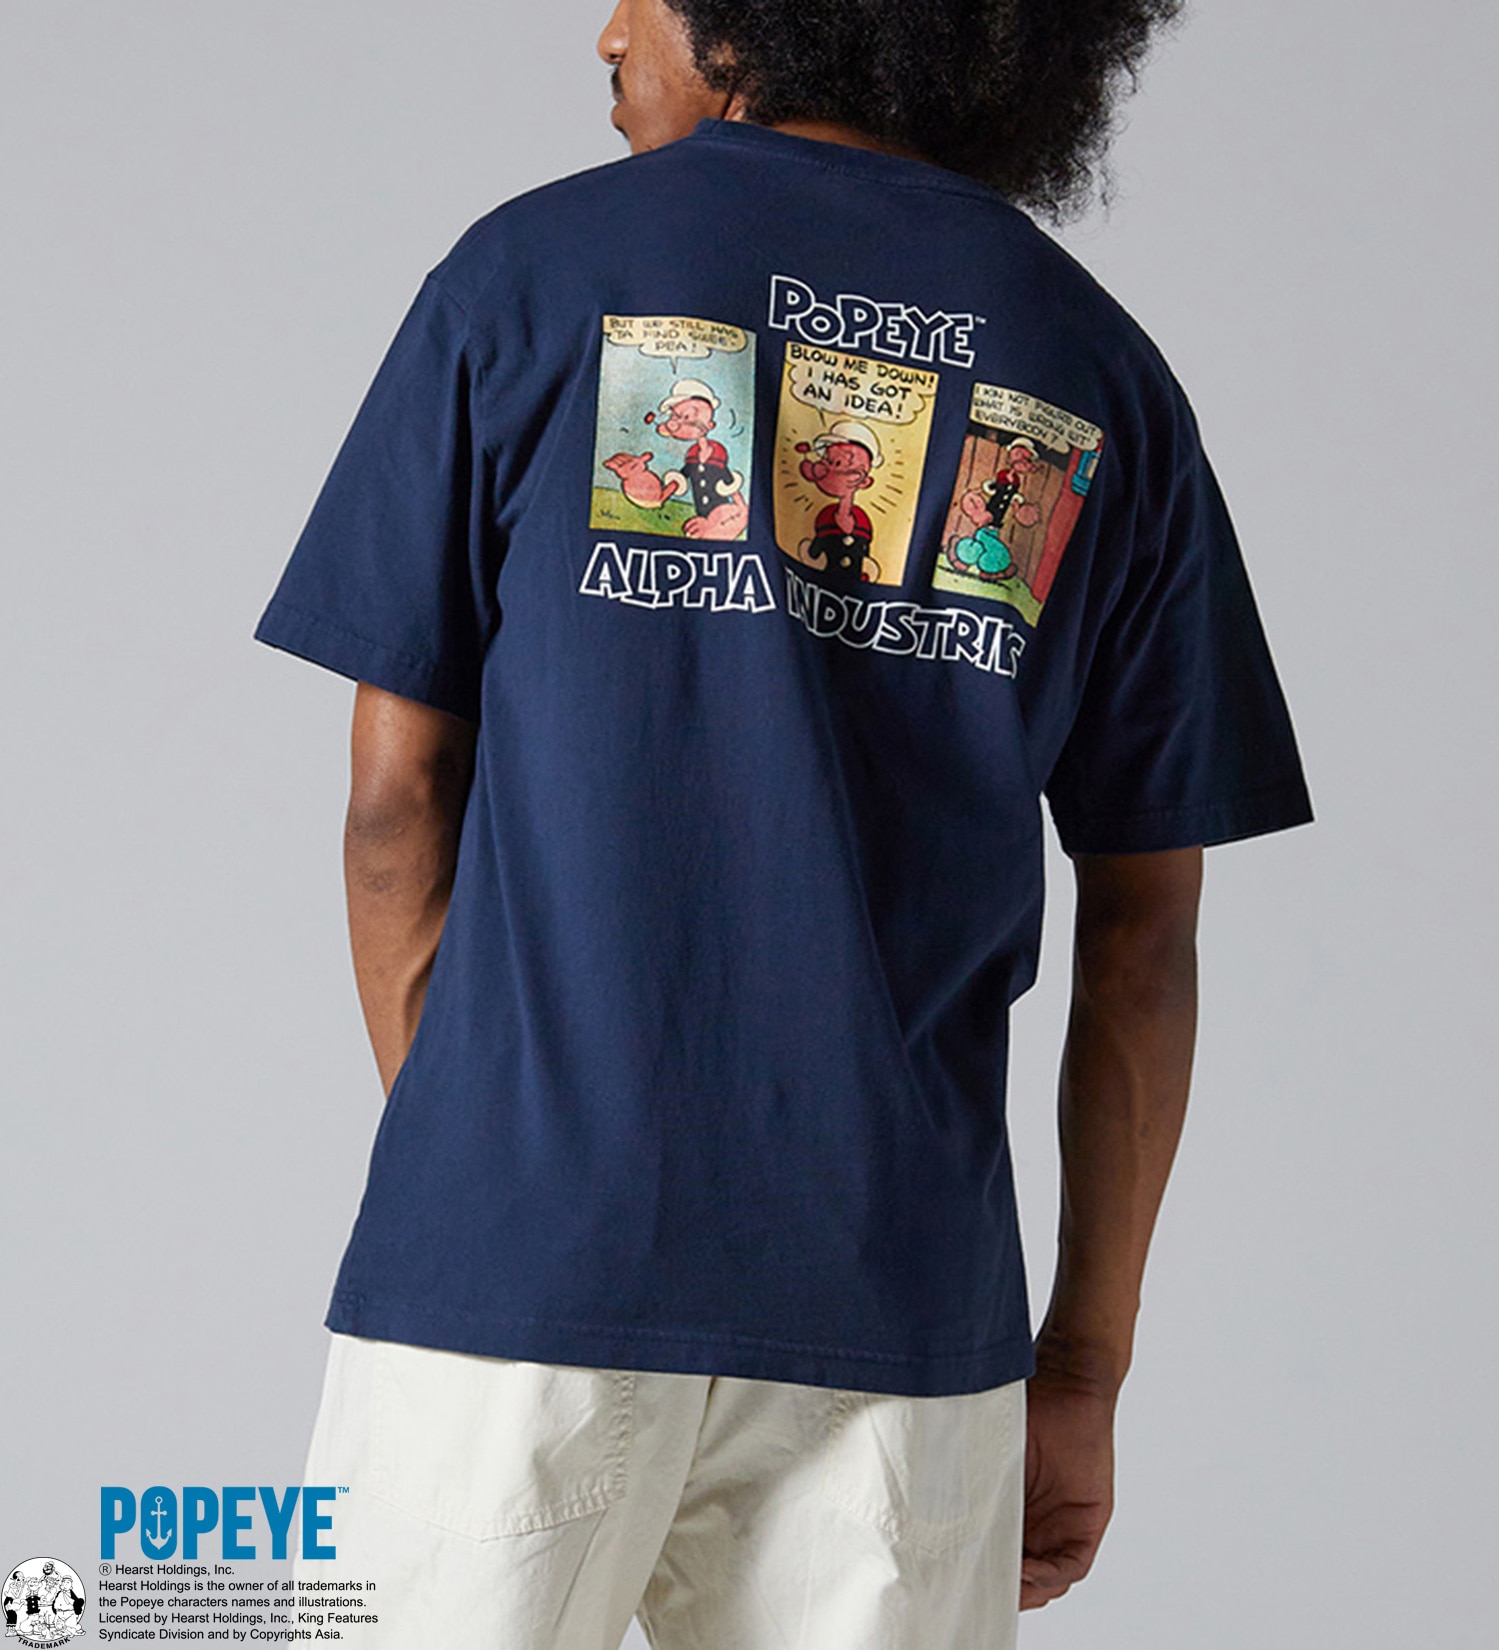 ALPHA(アルファ)の【おまとめ割対象】POPEYE(TM)xALPHA バックプリントTシャツ(コミック)|トップス/Tシャツ/カットソー/メンズ|ネイビー